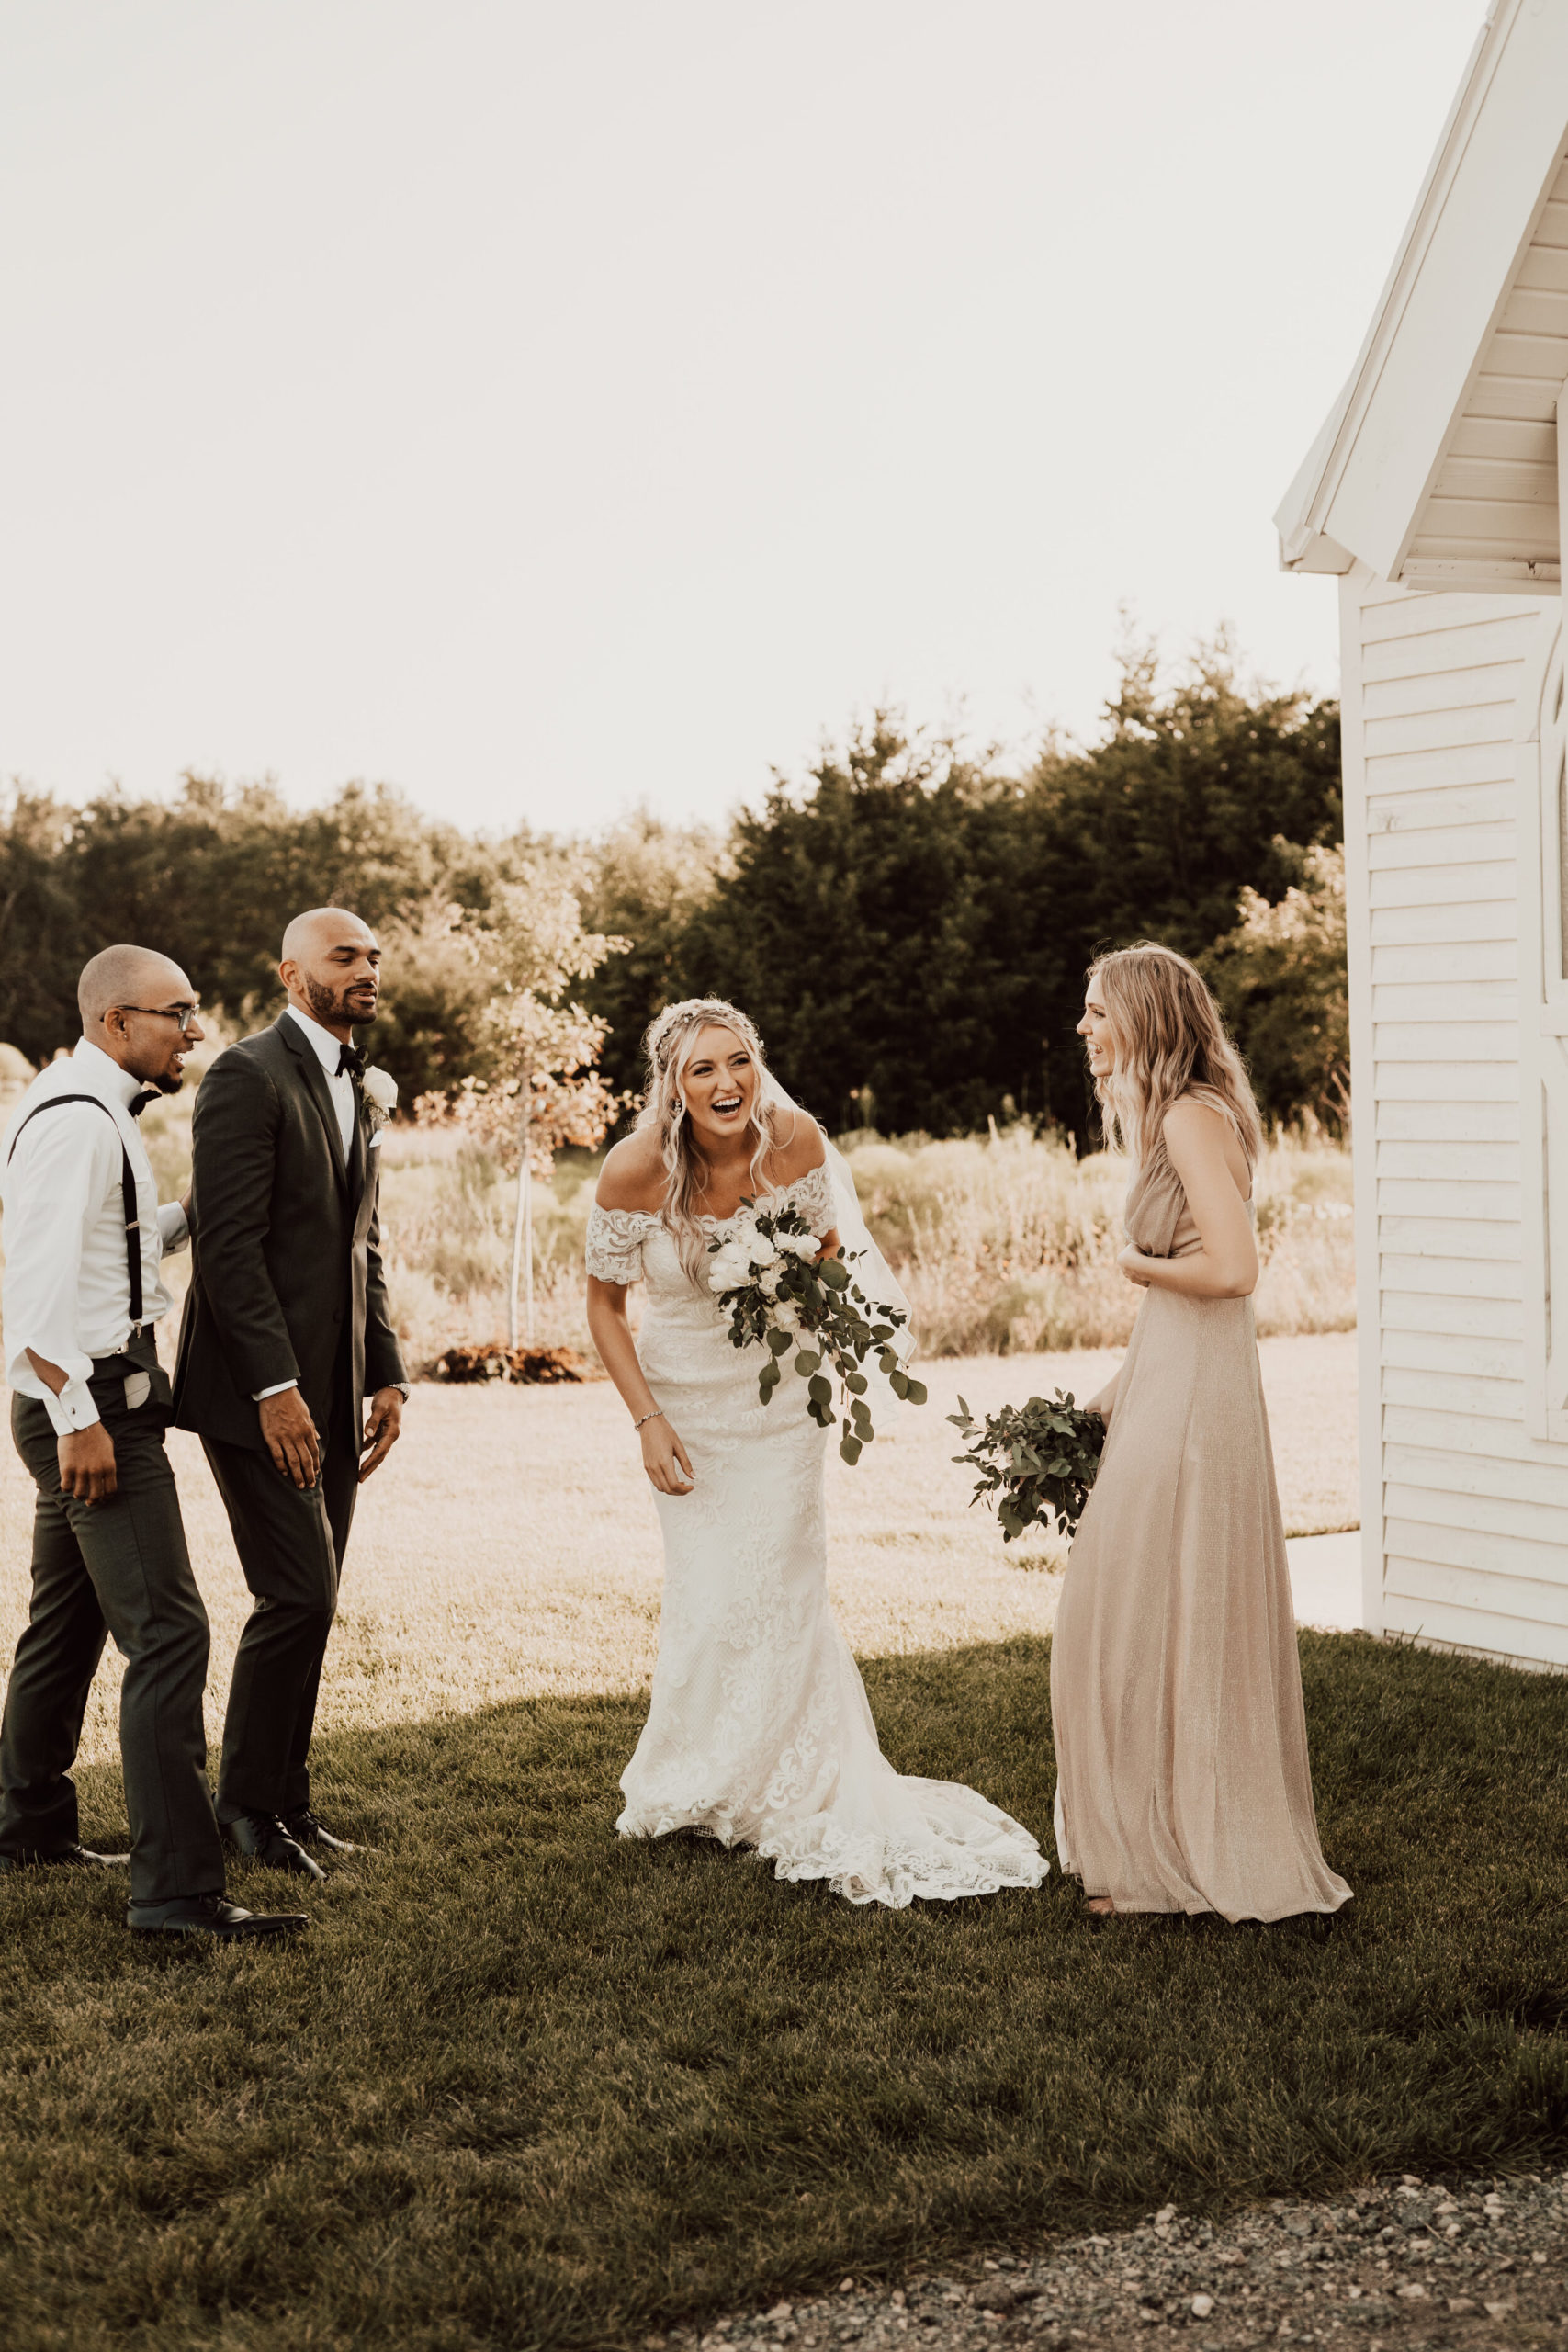 Hayley + Lorenzo - Summer White Chapel Wedding at Stone Hill Barn in Augusta, Kansas168.jpg